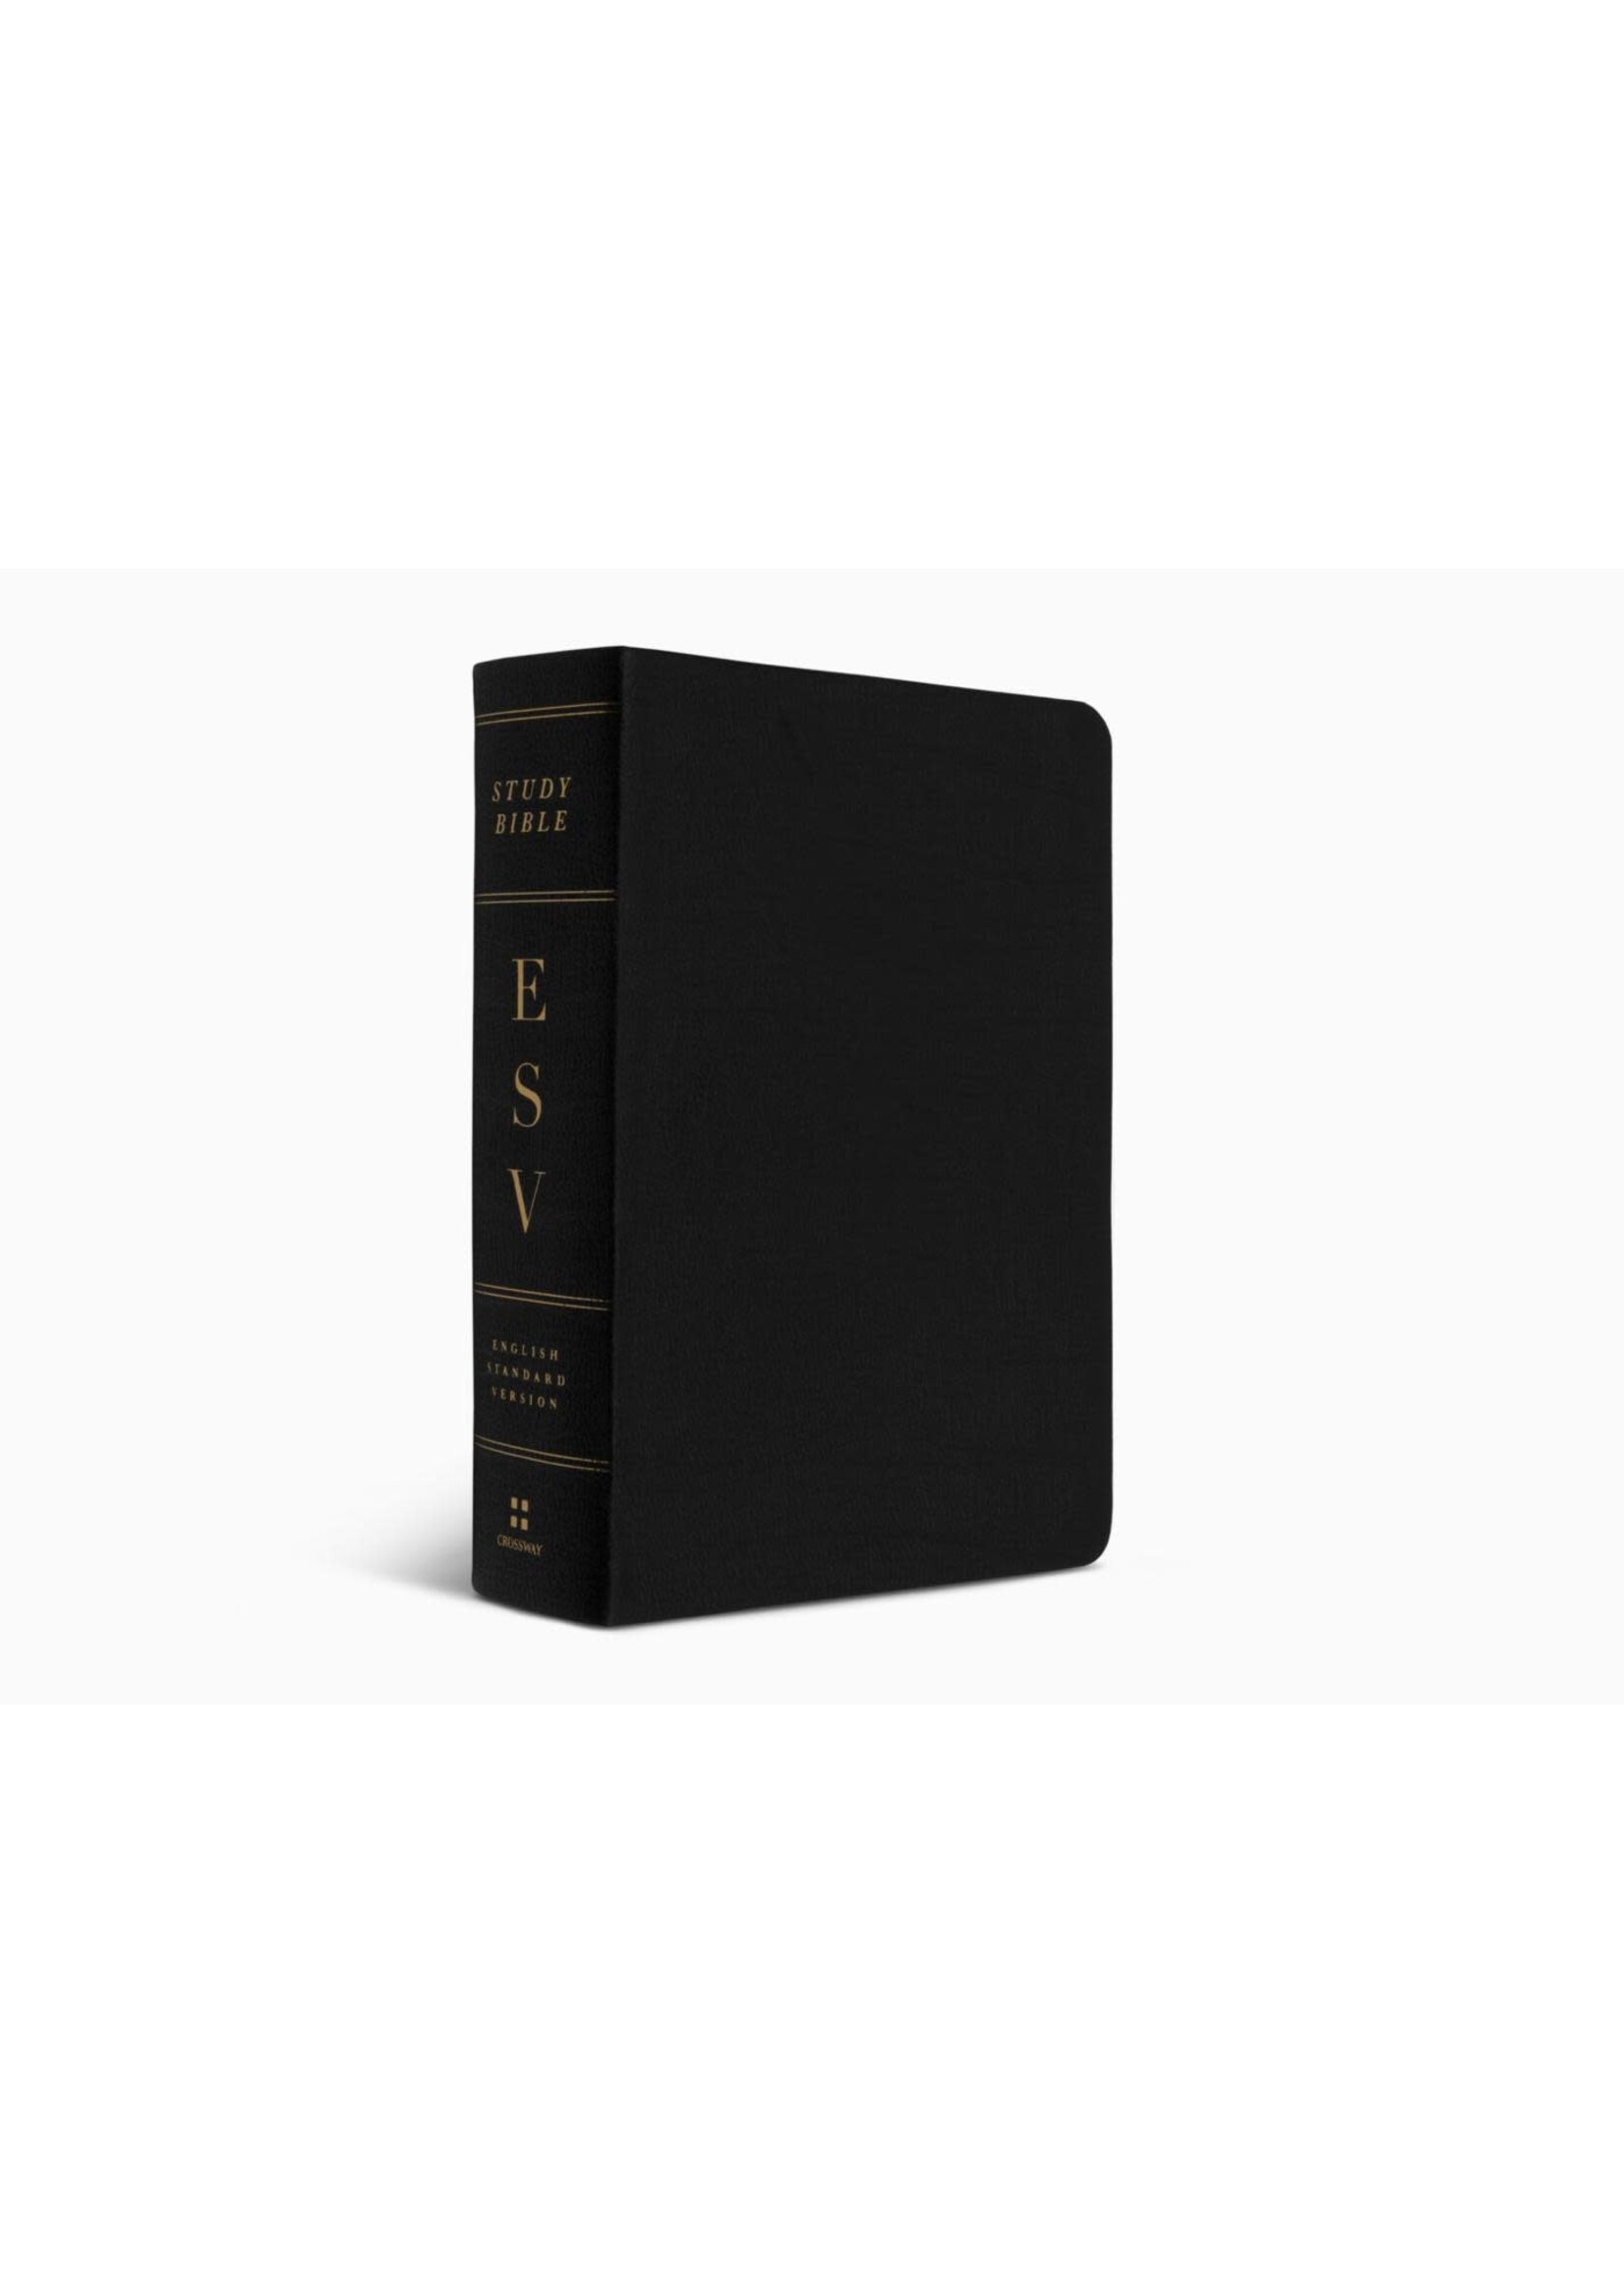 Crossway ESV Study Bible: Black, Personal Size, Leather